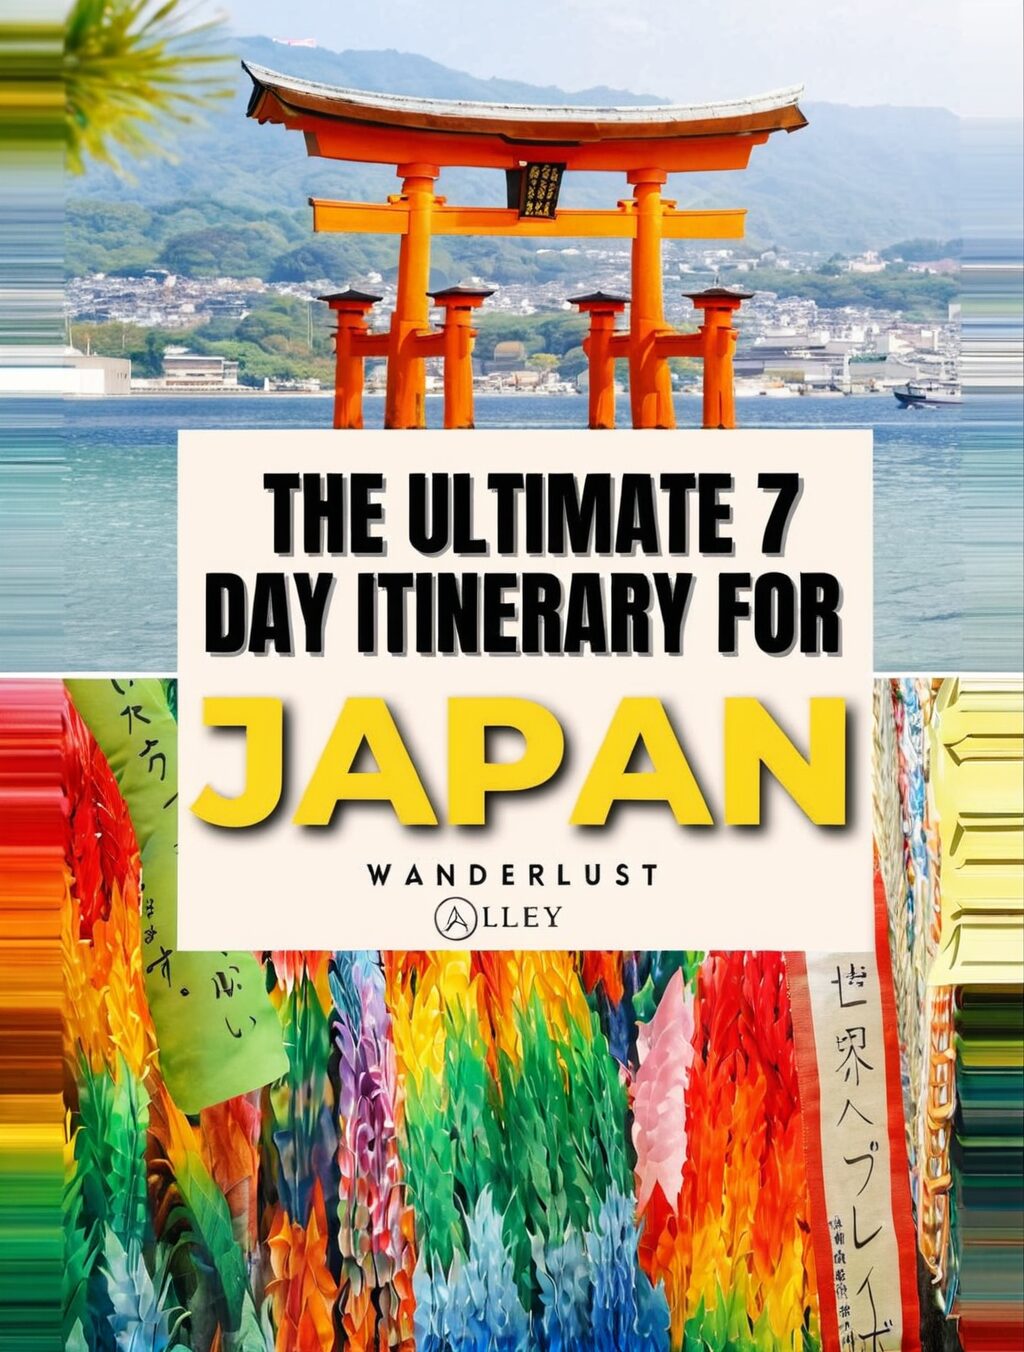 best one week itinerary japan